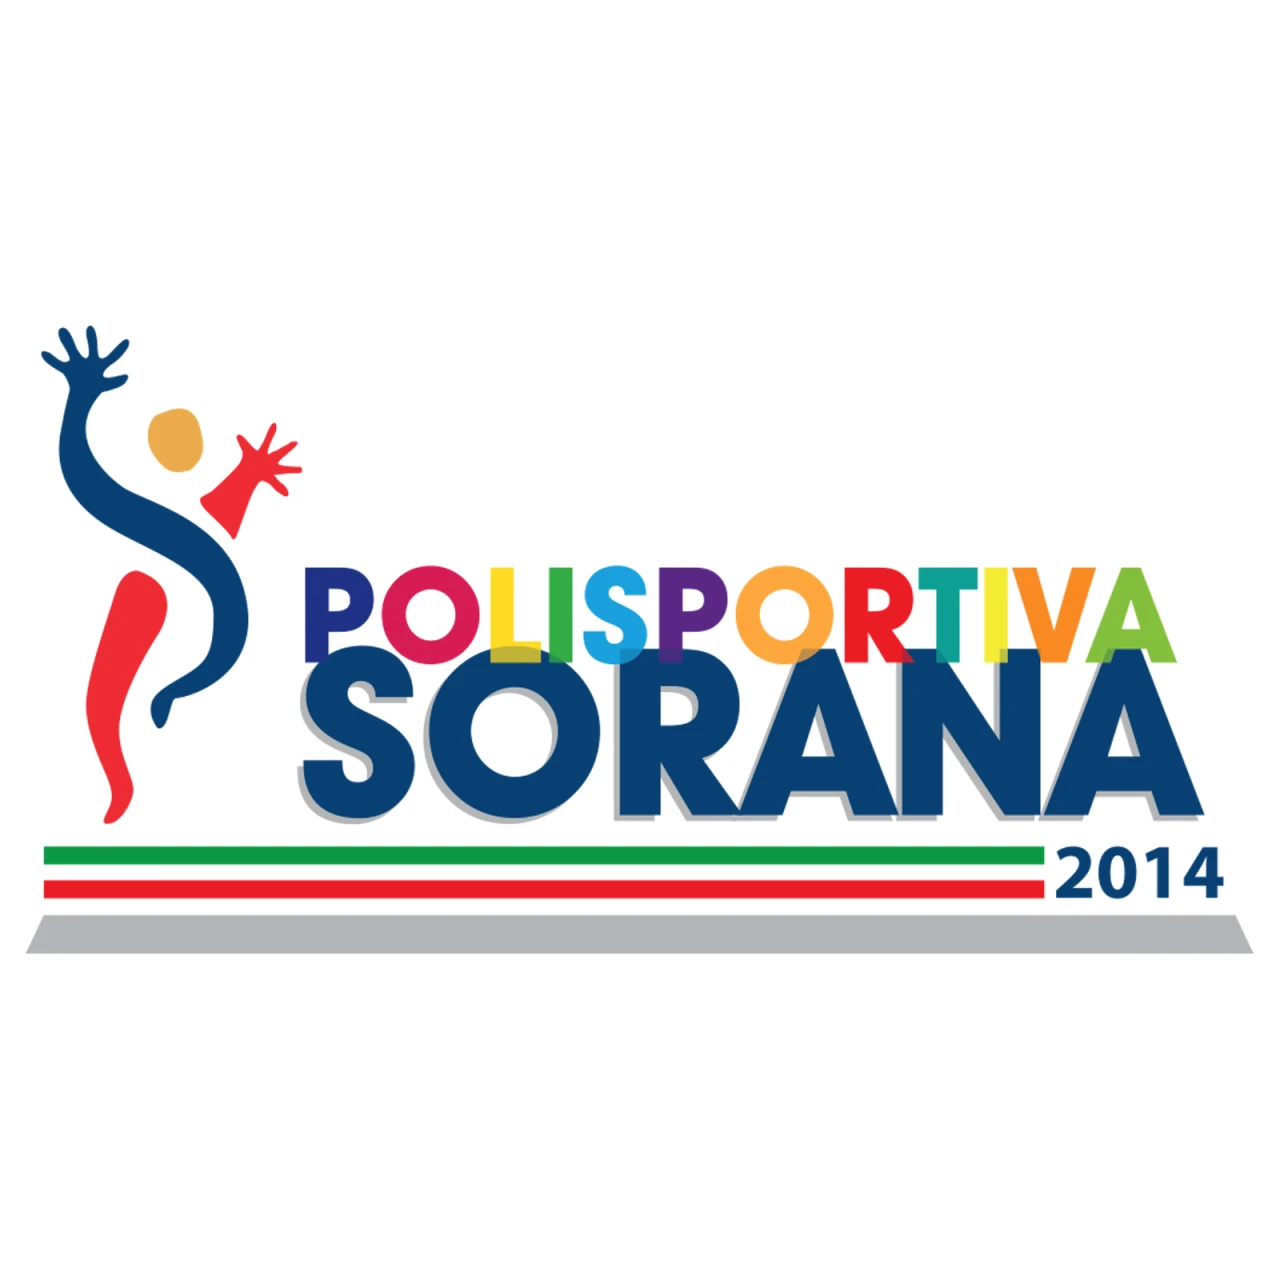 Polisportiva Sorana